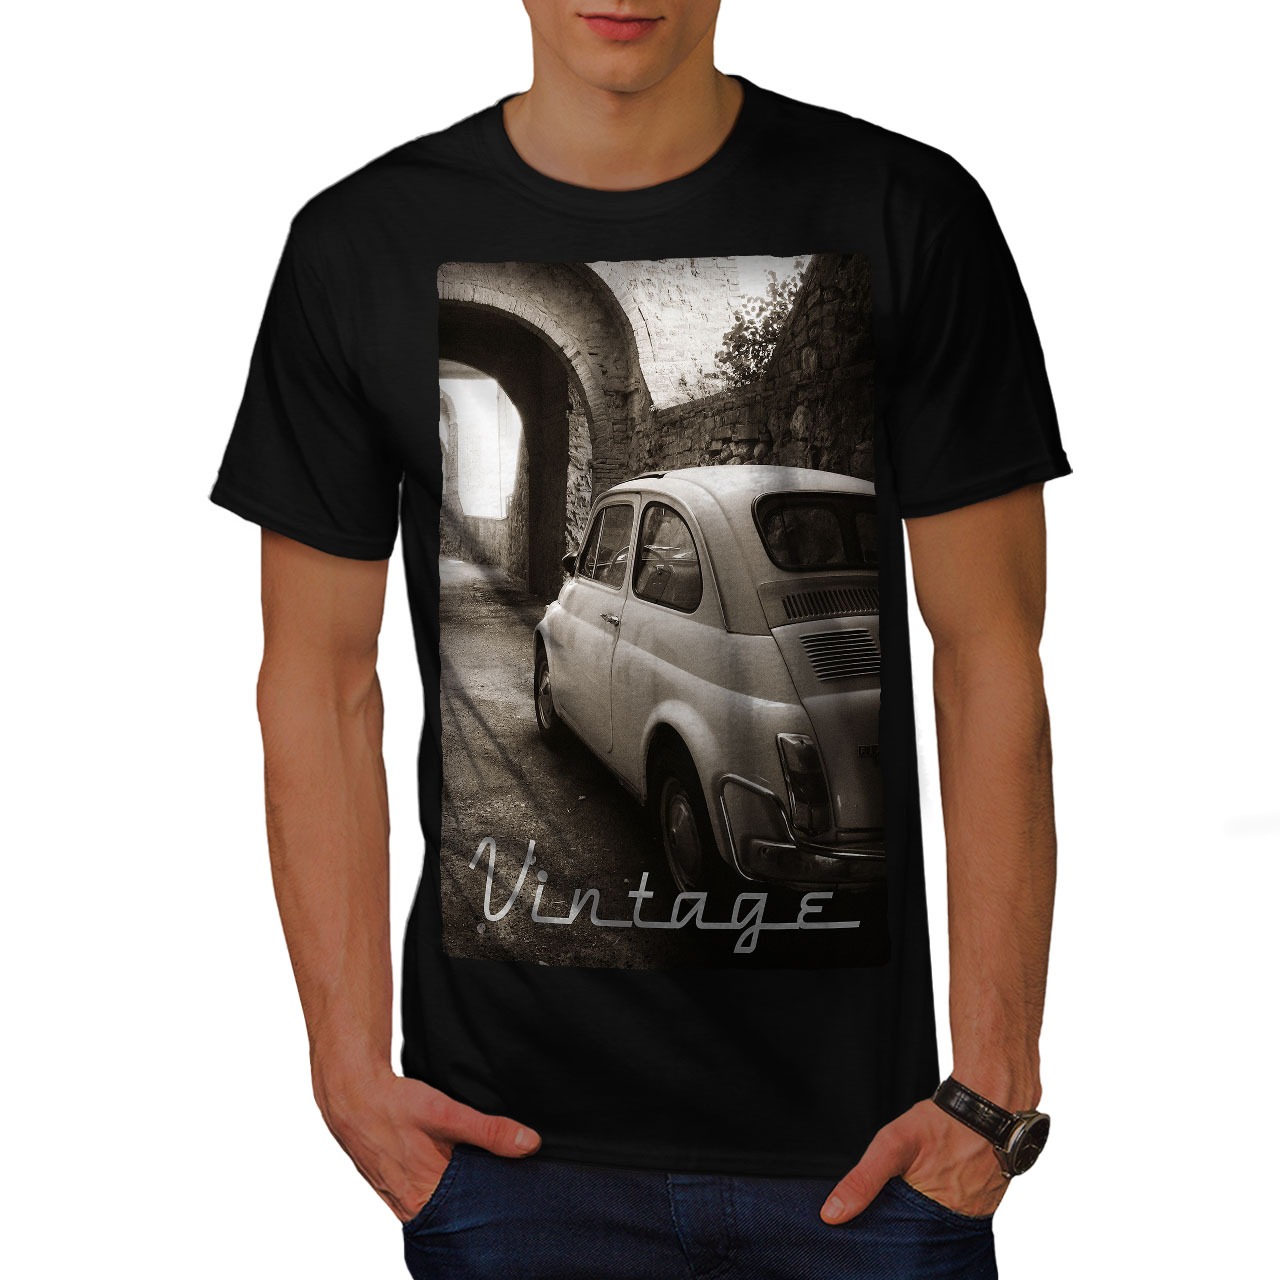 Wellcoda Car Retro Funky Vintage Mens T-shirt Retro Graphic Design Printed Tee 